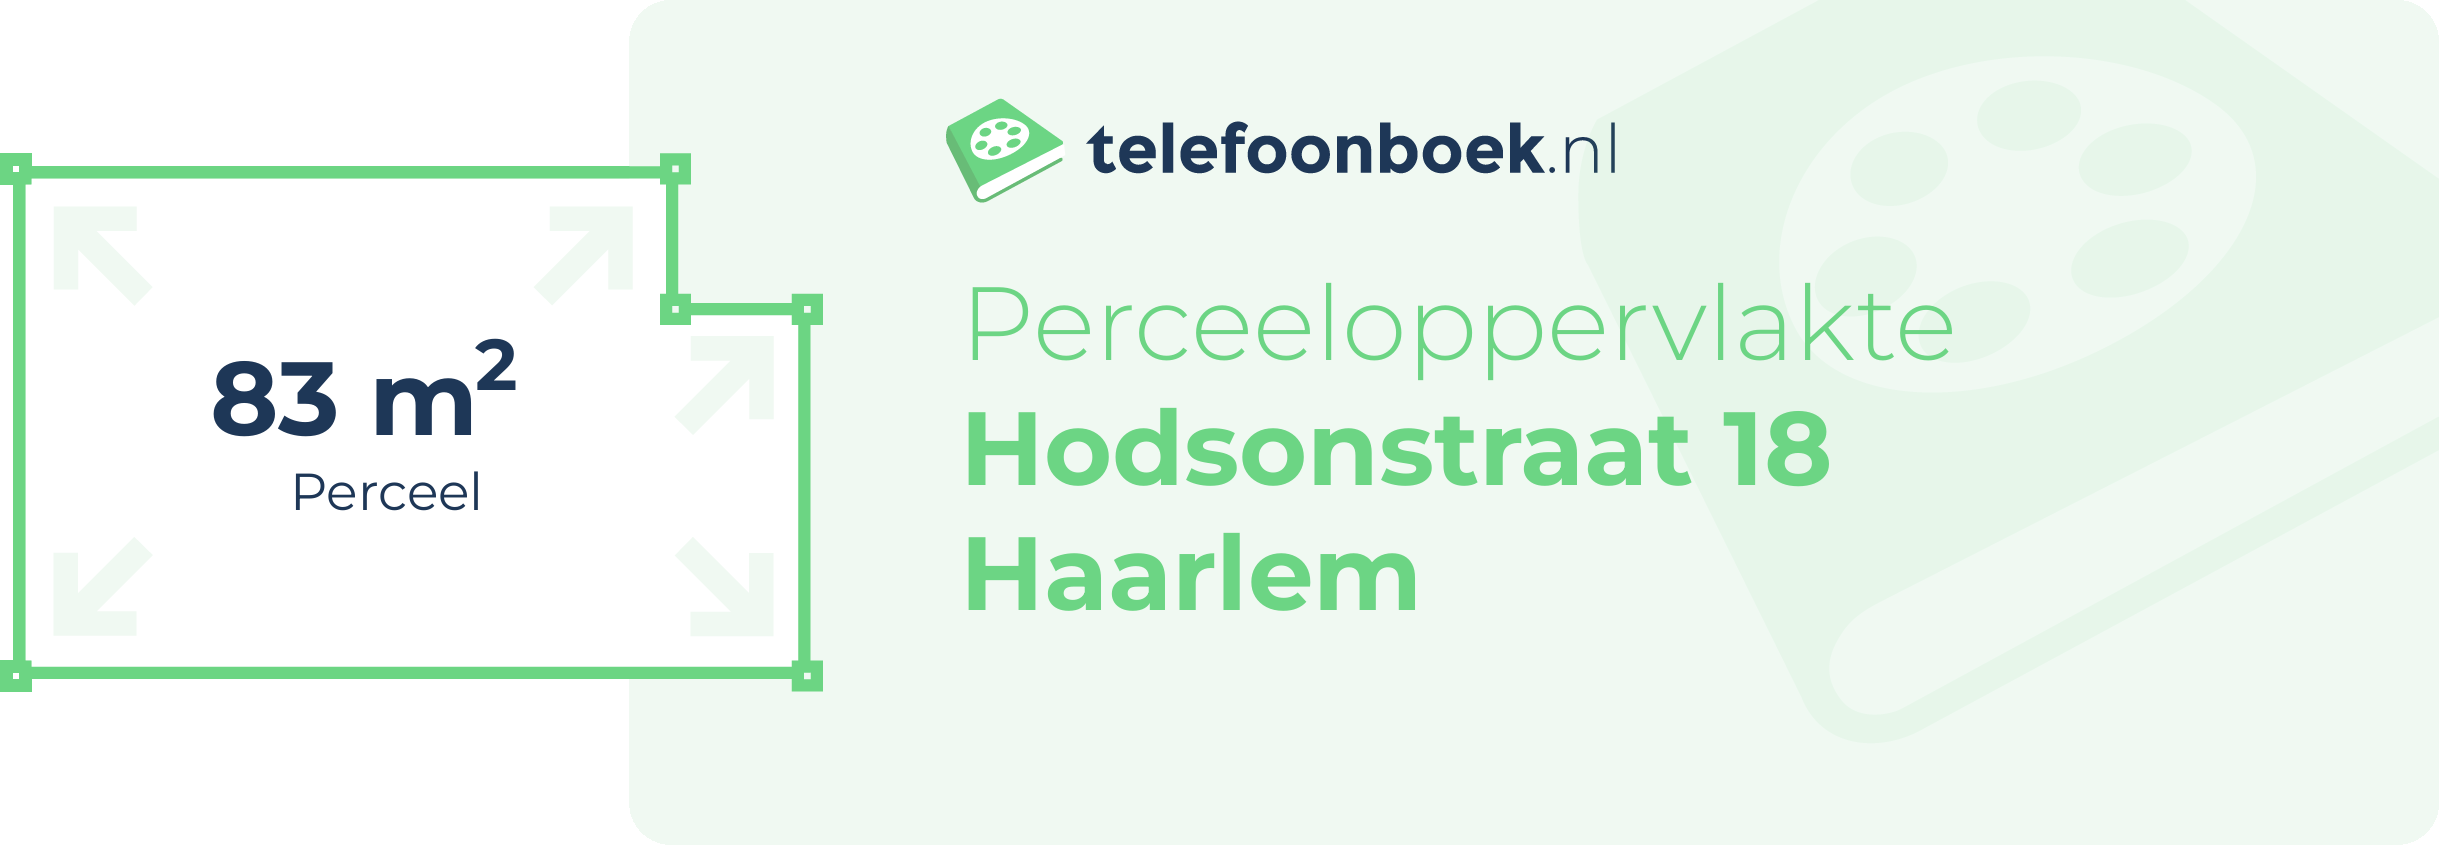 Perceeloppervlakte Hodsonstraat 18 Haarlem